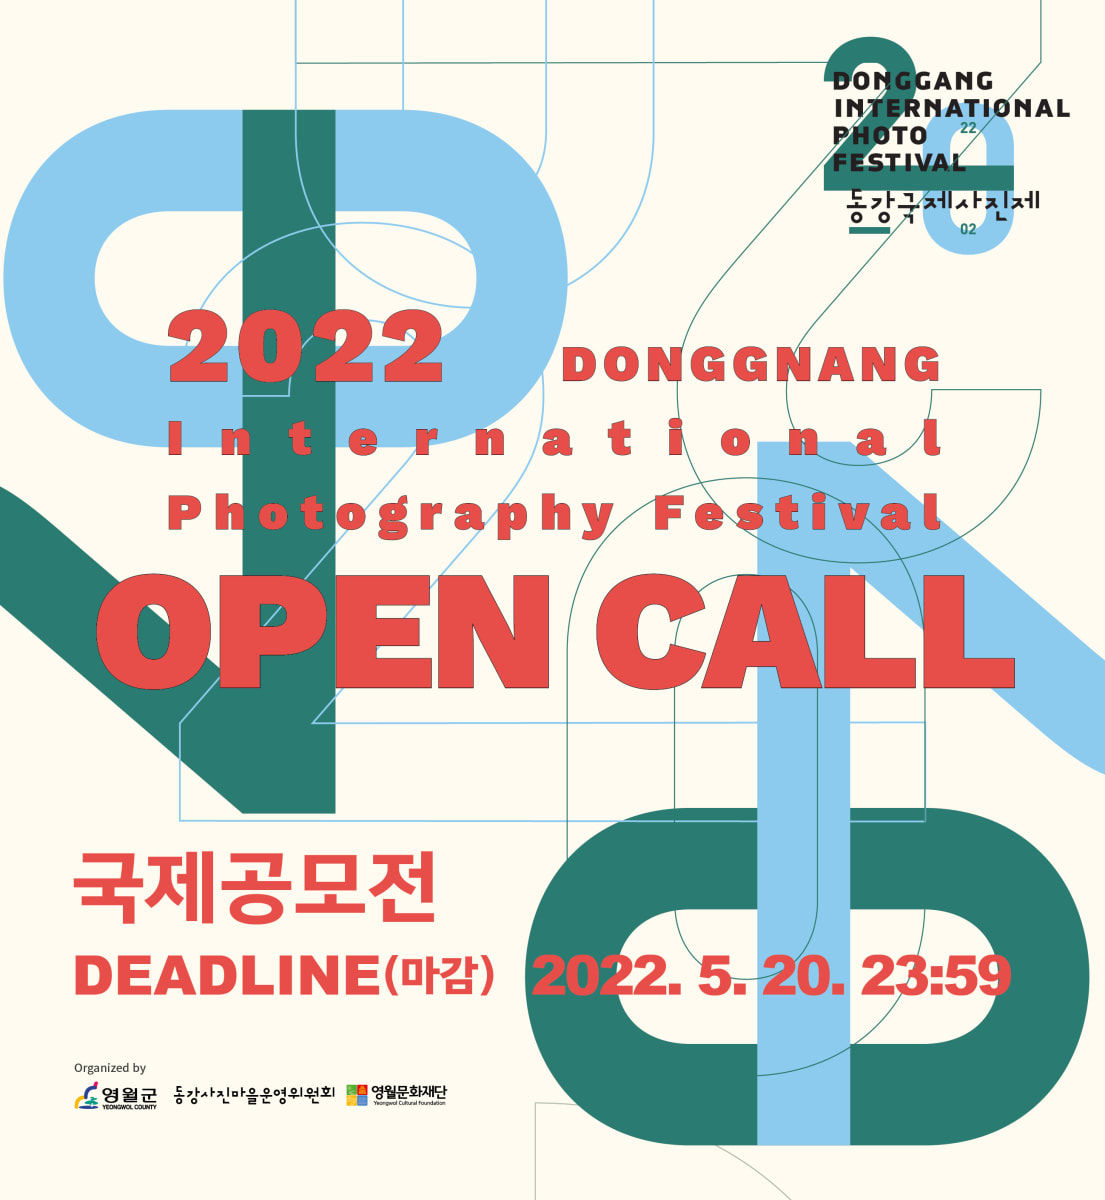 DongGang International Photo Festival 